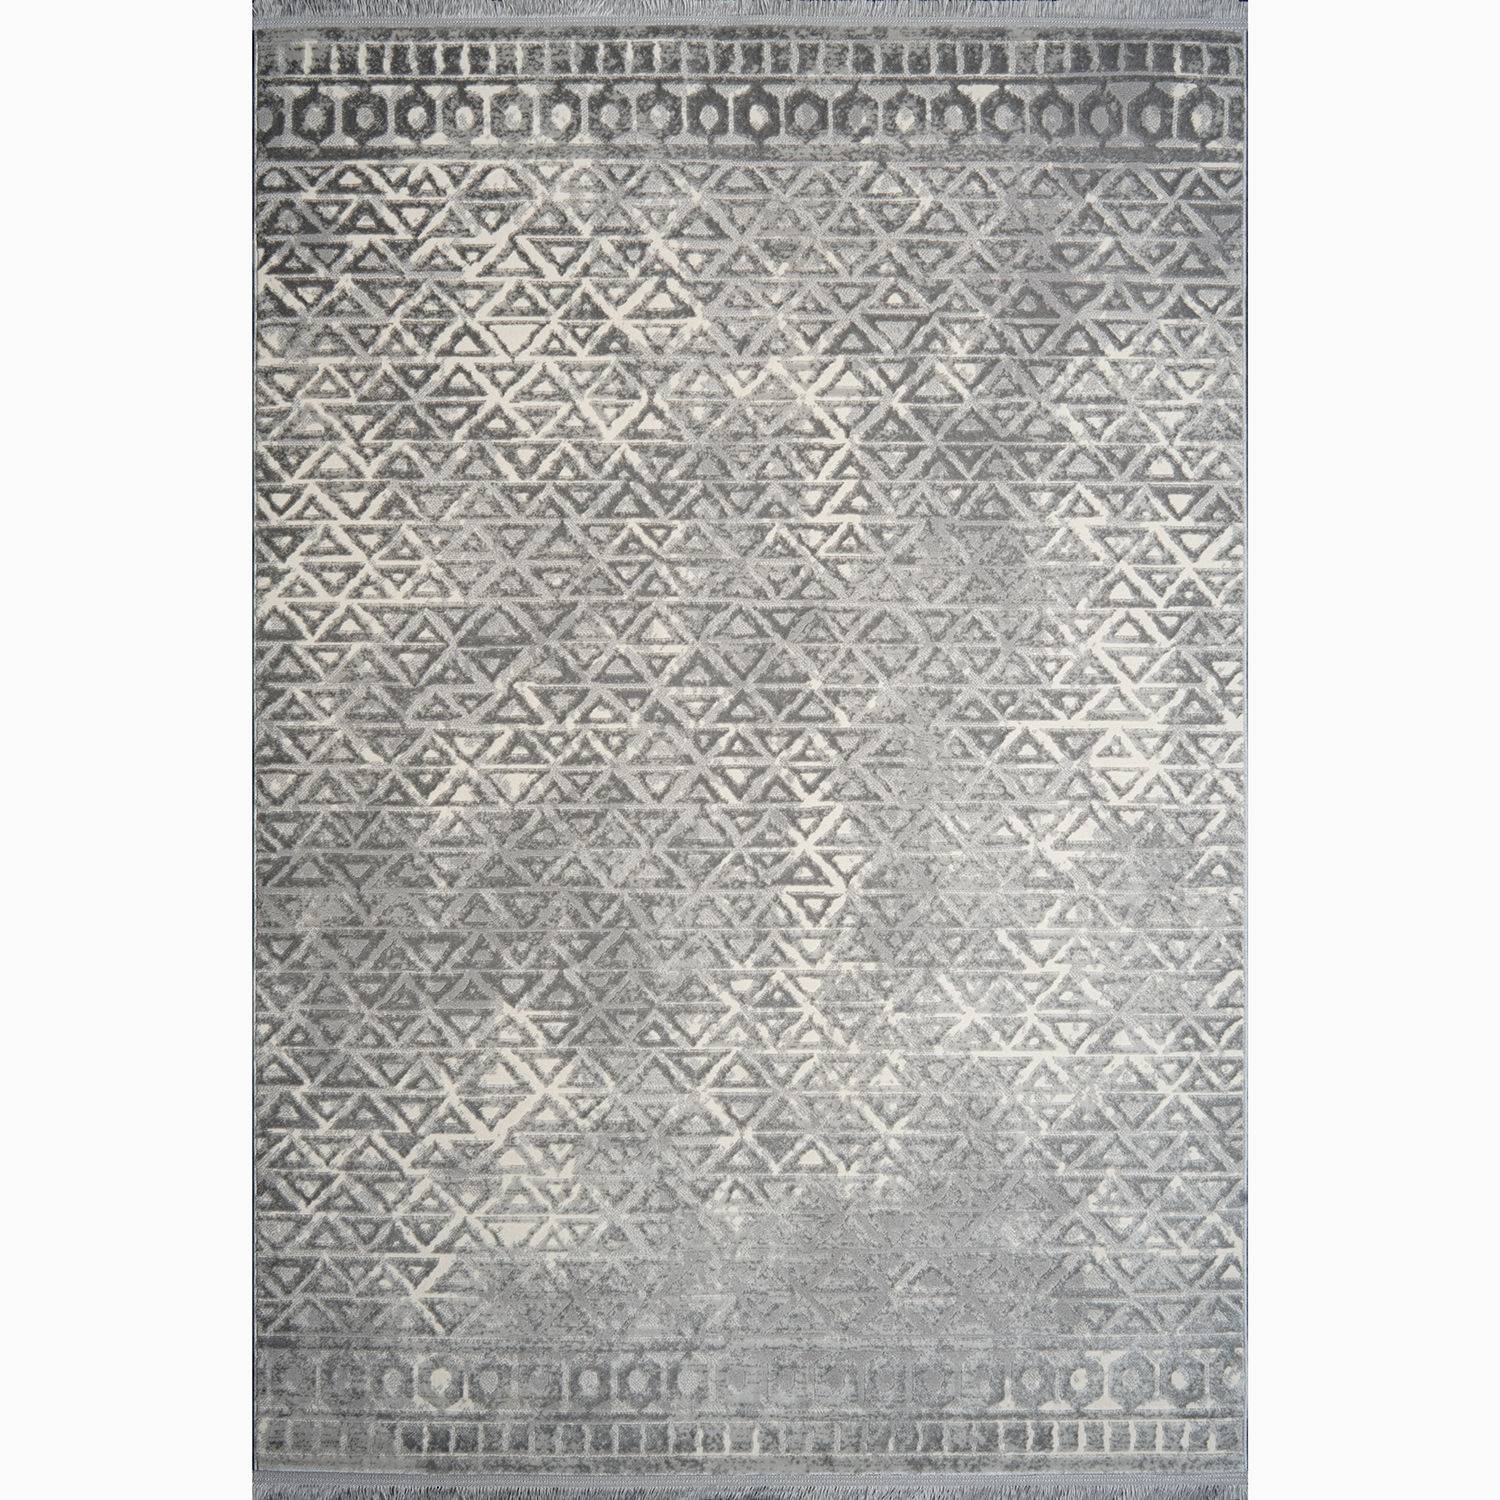 Ketuss Teppich 120x170cm Stoff Geometrisches Muster Grau